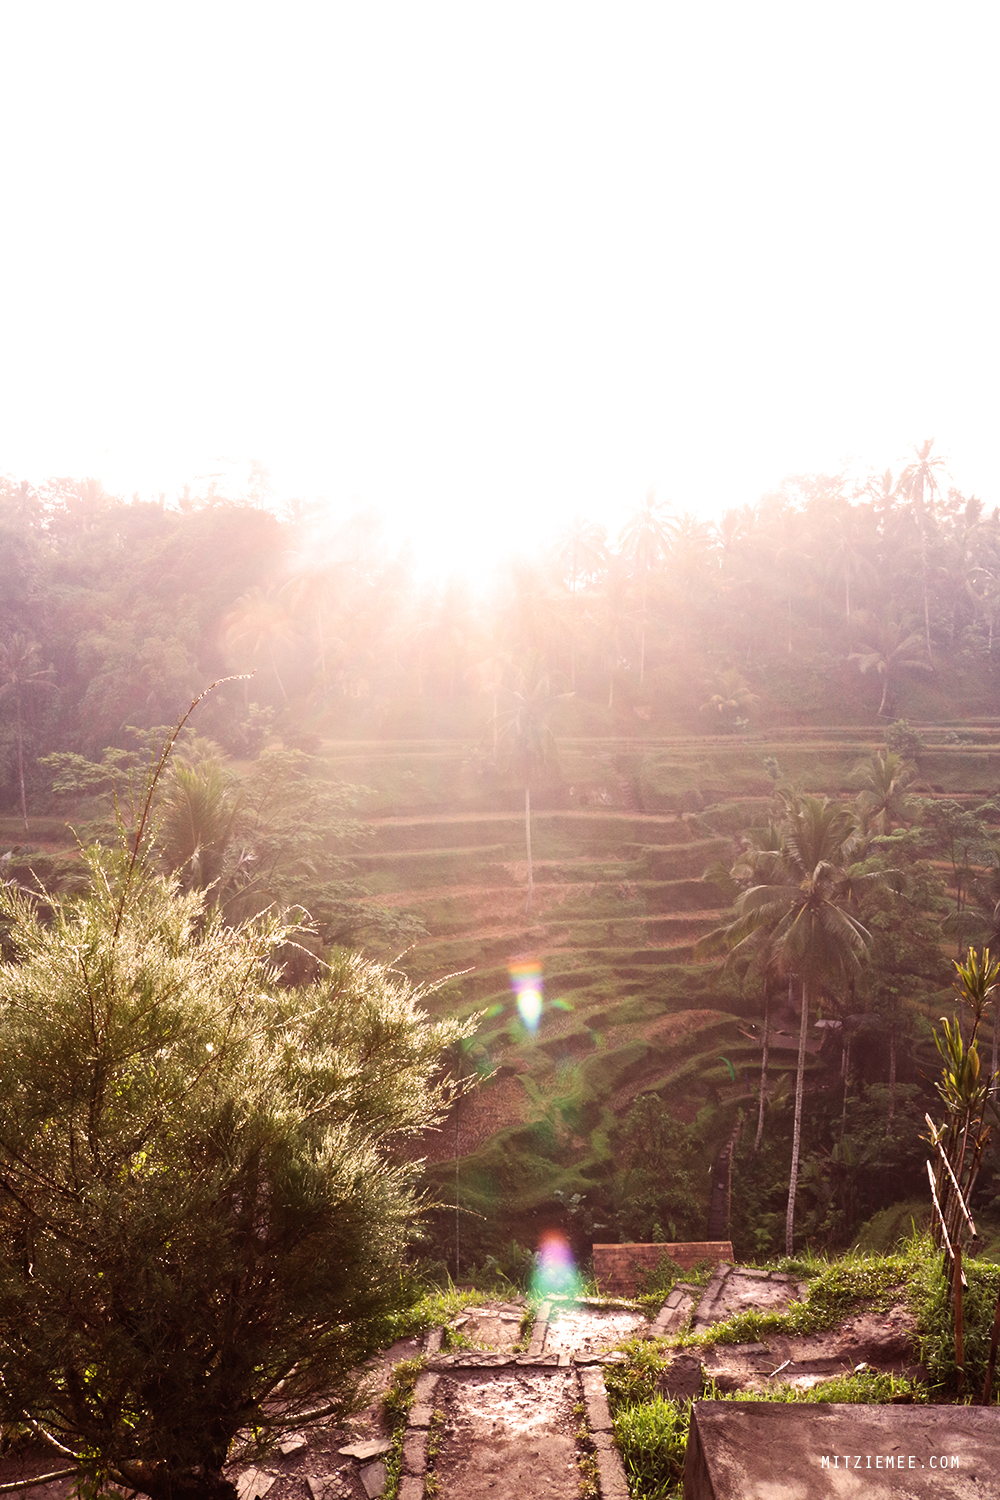 Tegallalang rice terraces, Bali